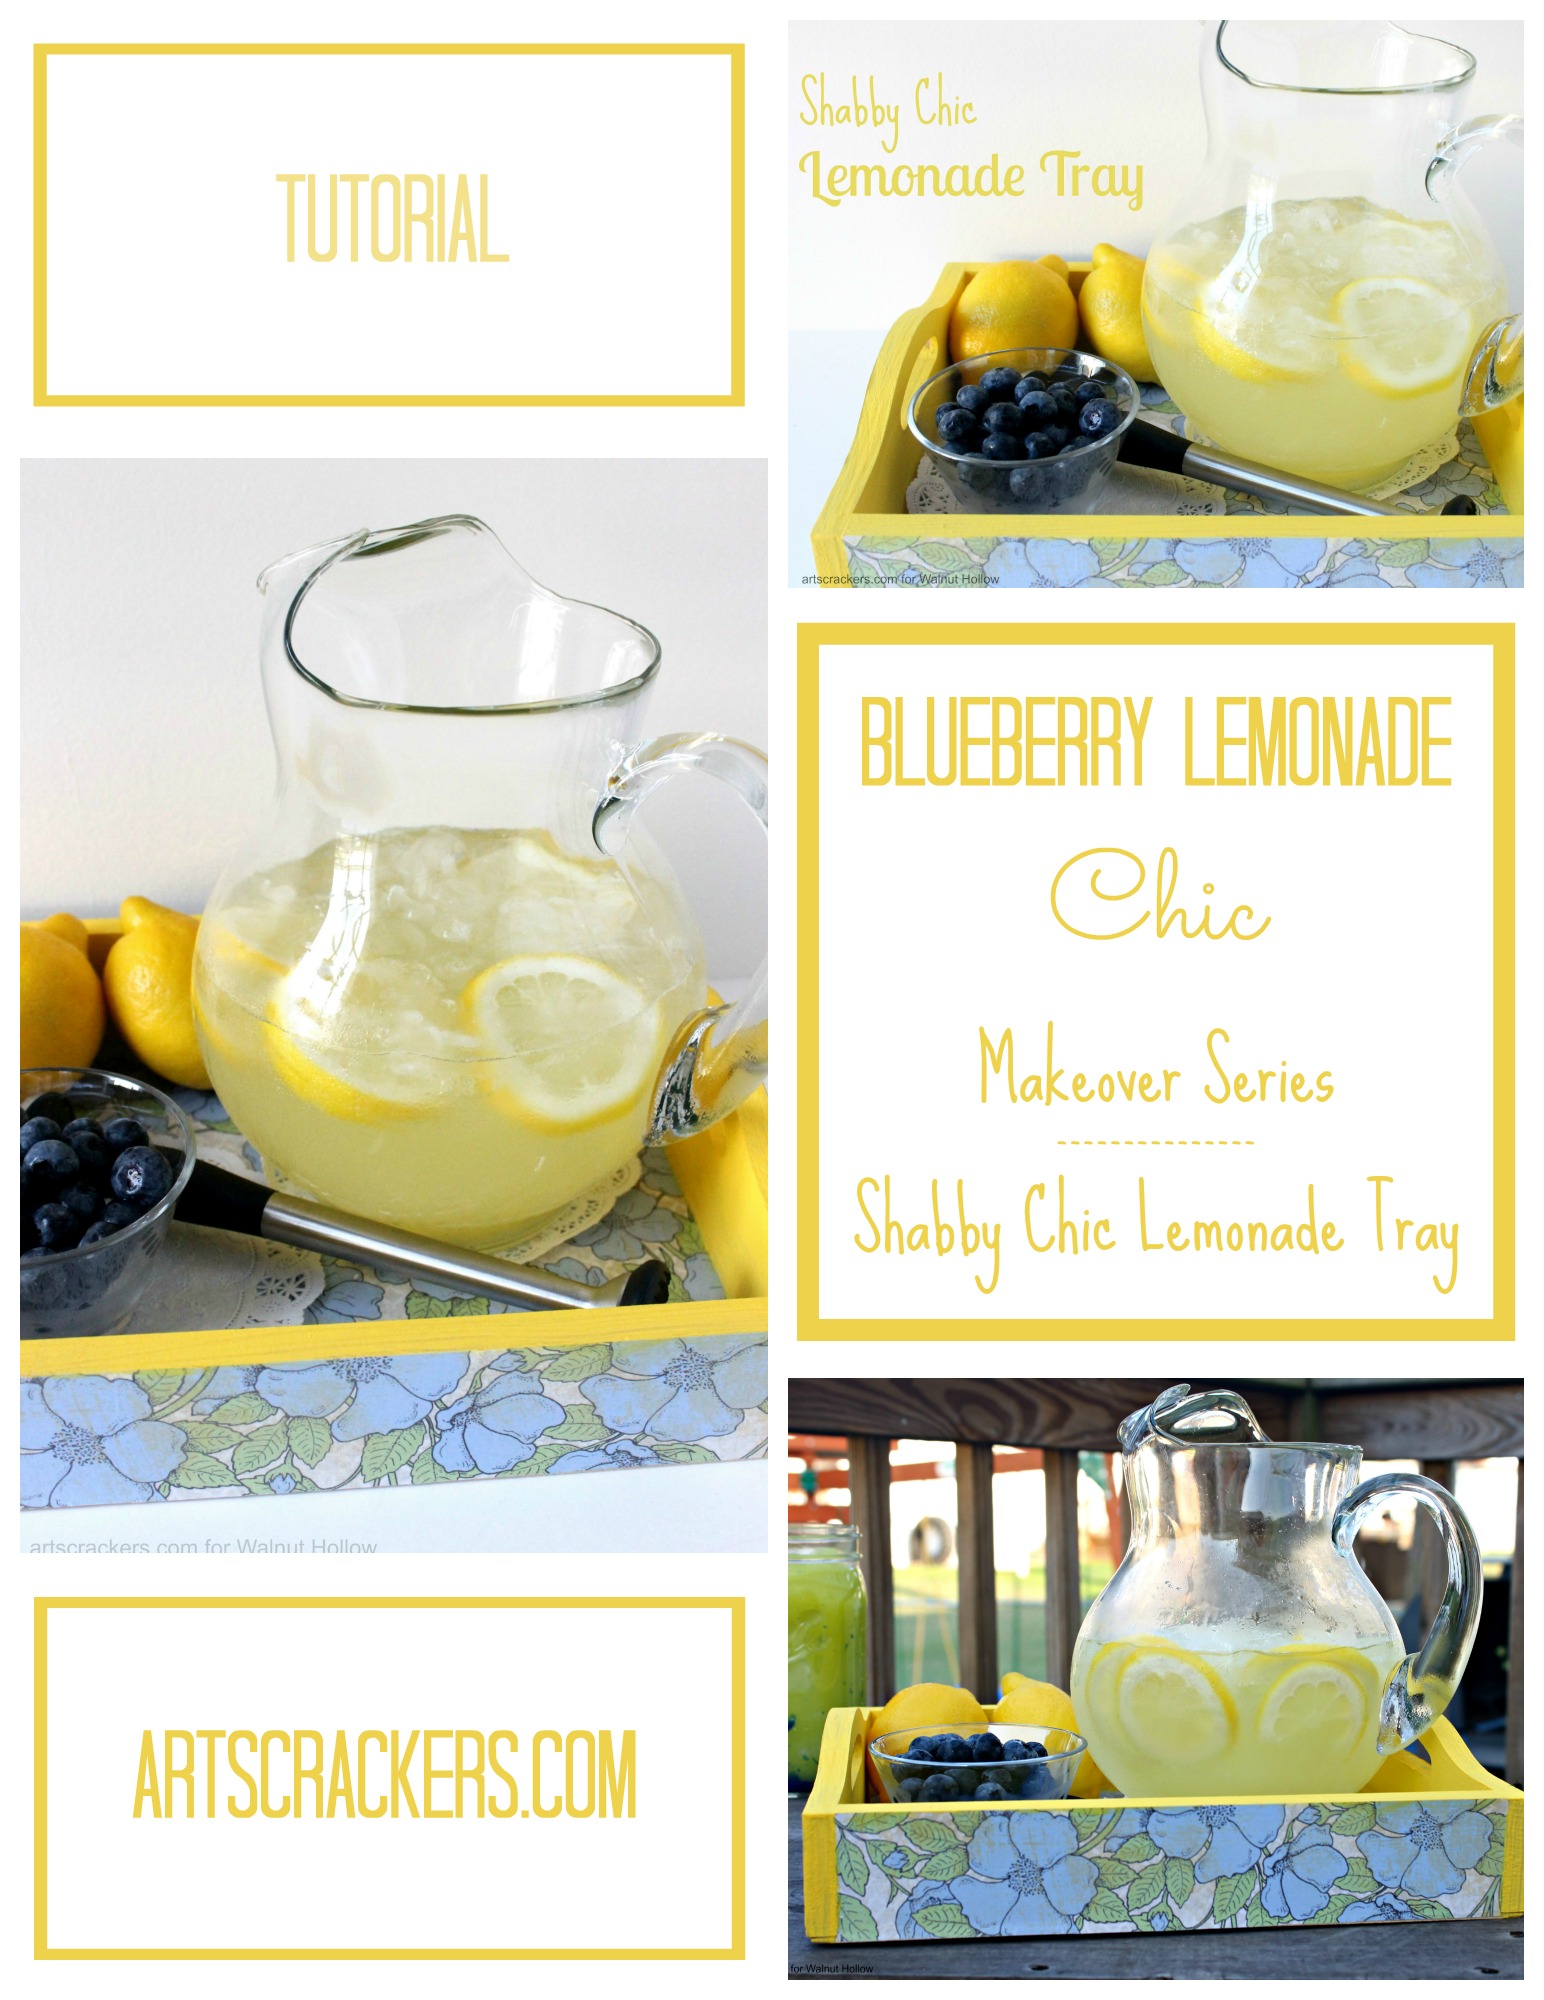 Blueberry Lemonade Chic Makeover Series Shabby Chic Lemonade Tray